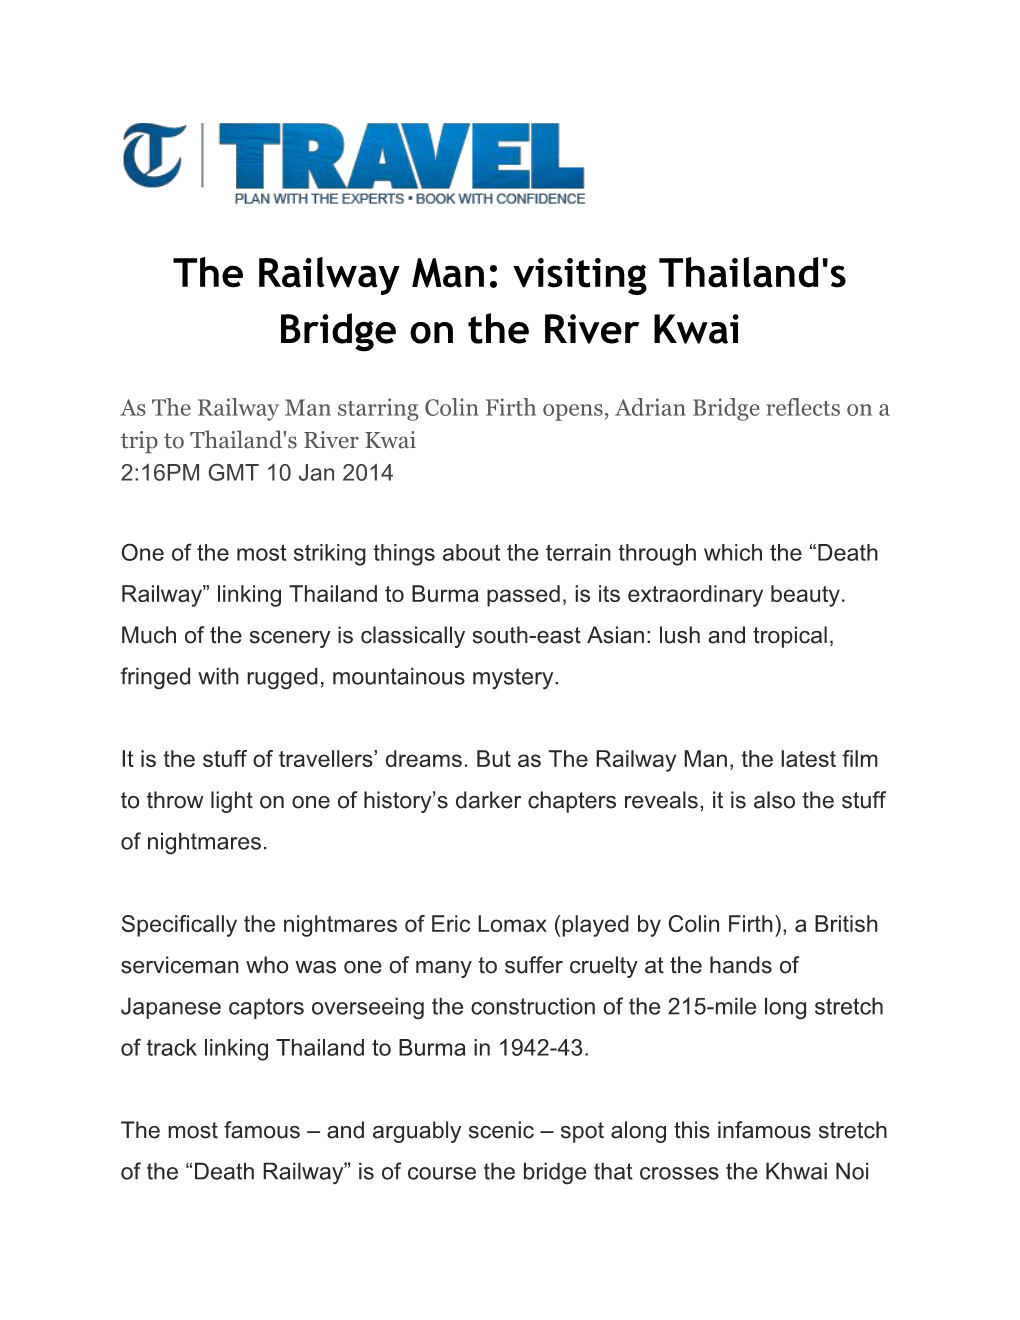 The Railway Man: Visiting Thailand's Bridge on the River Kwai